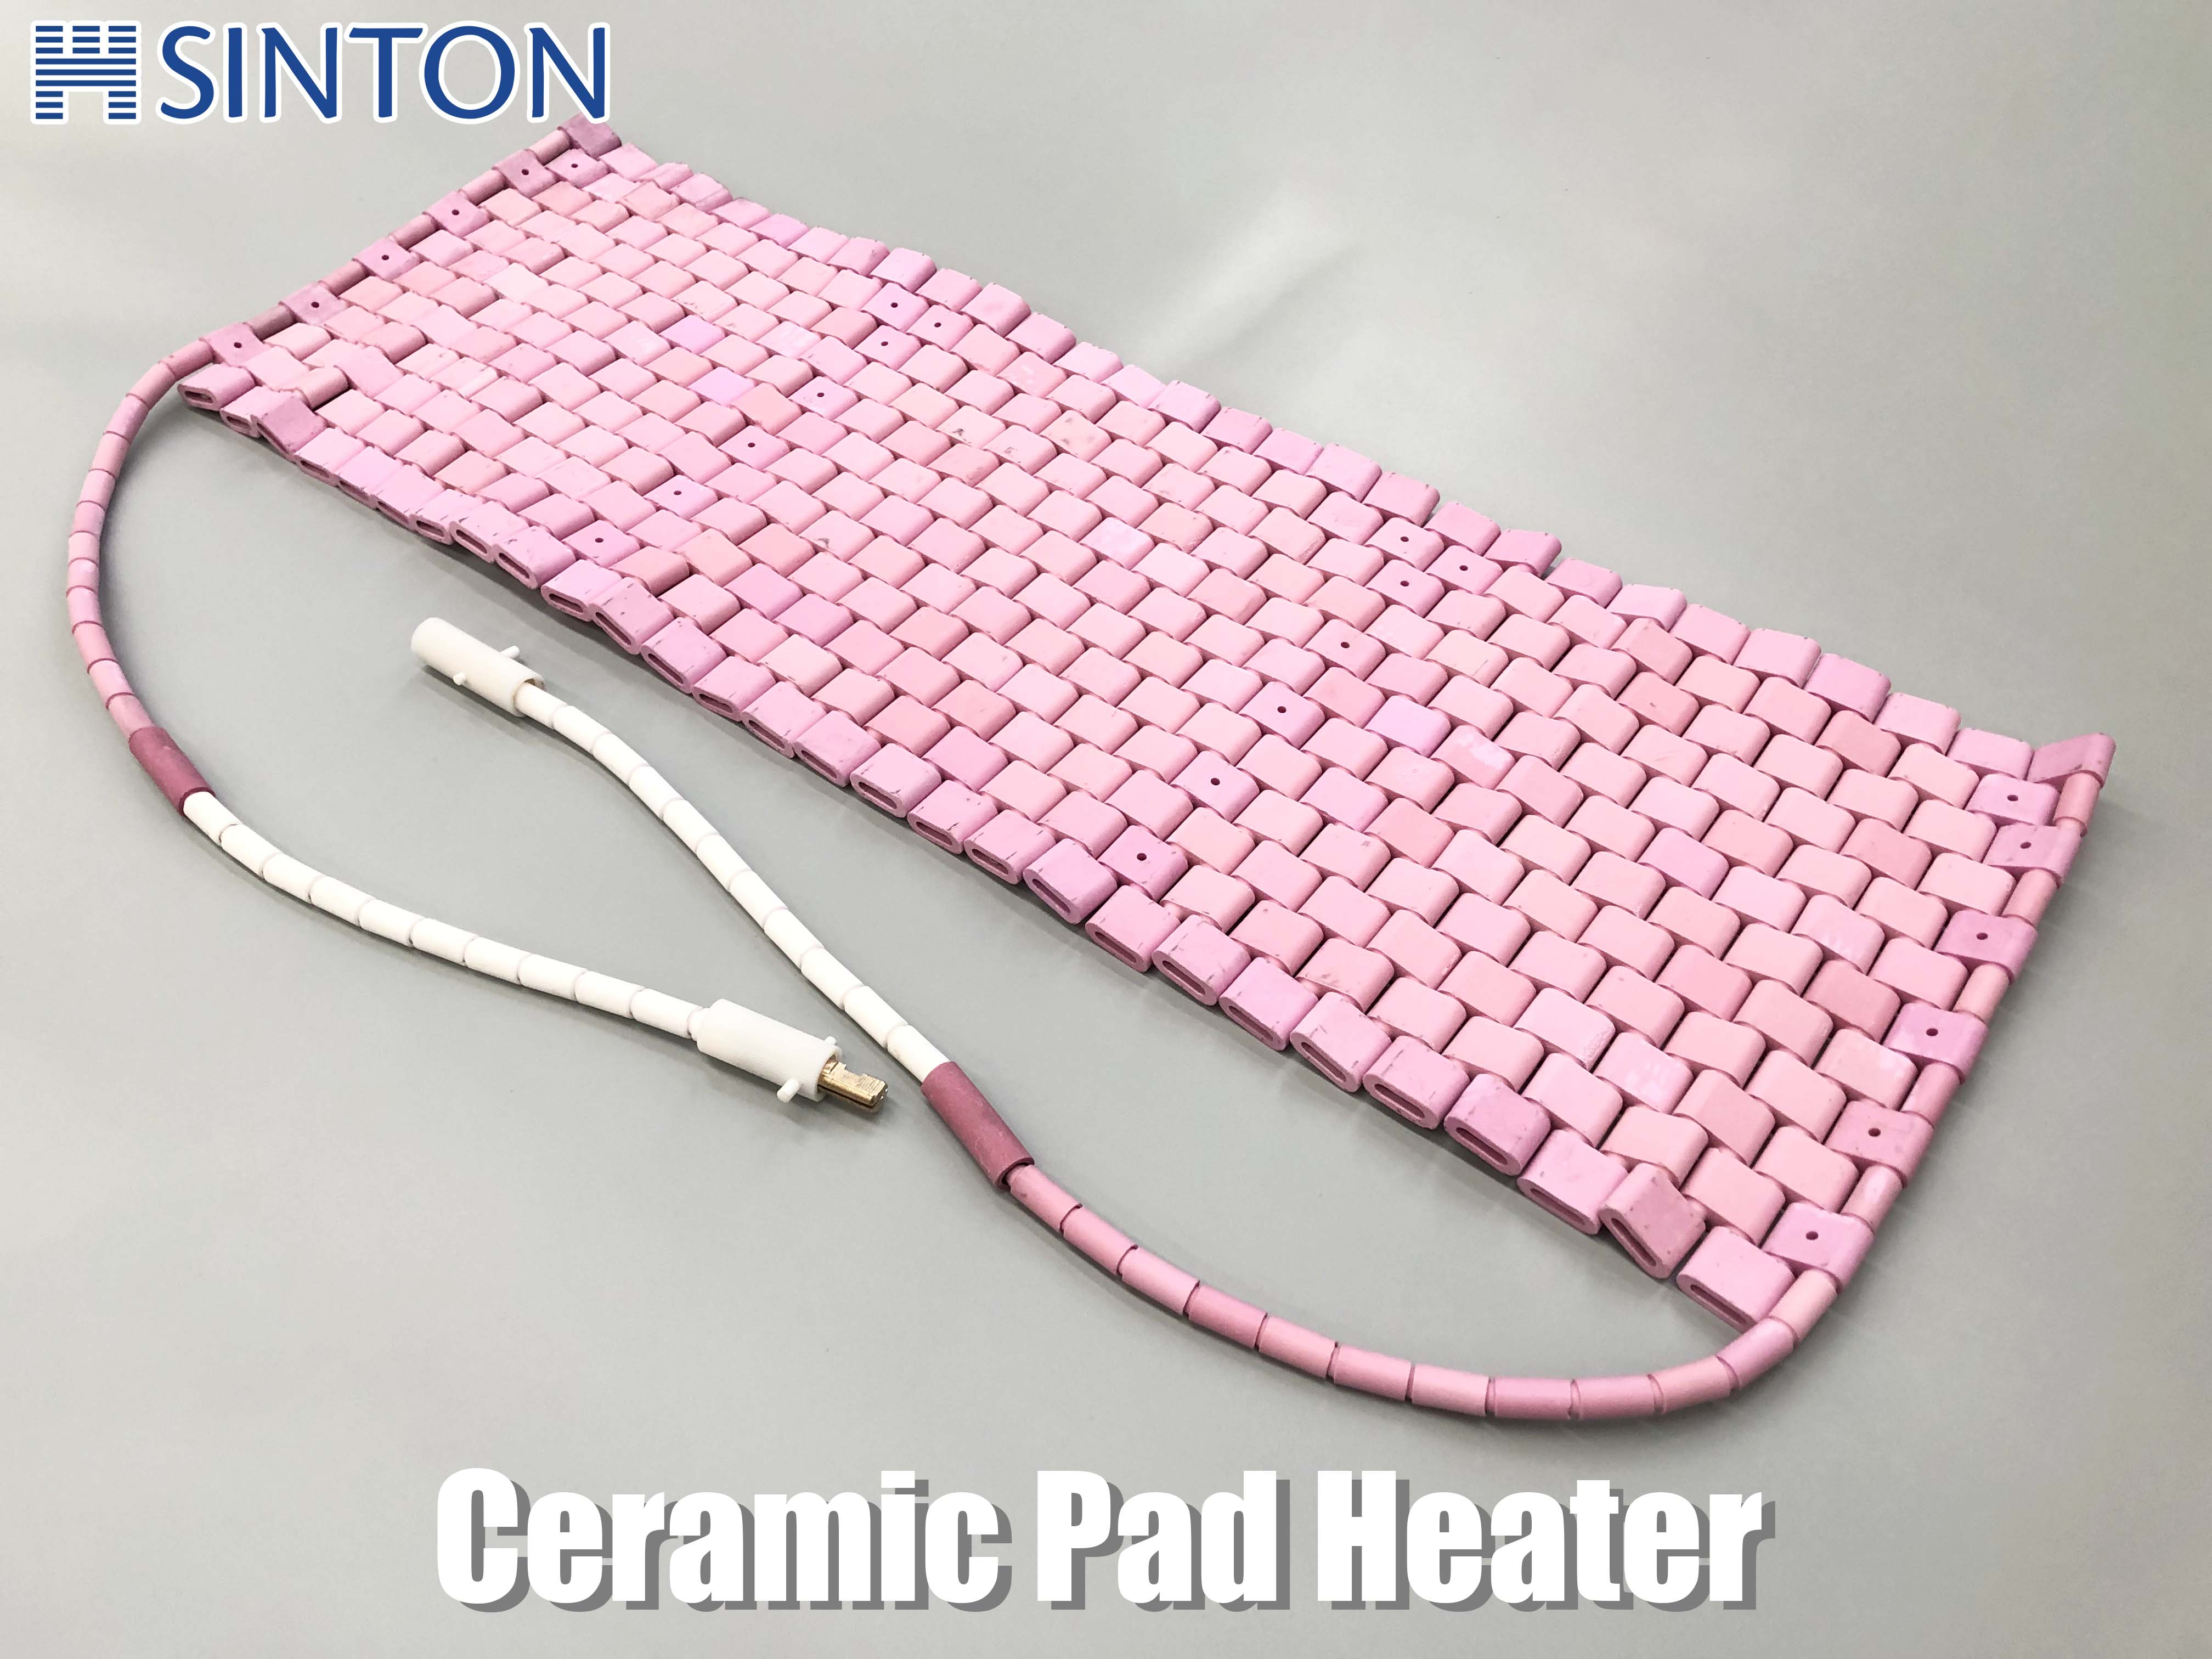 Ceramic Pad Heater 2.jpg